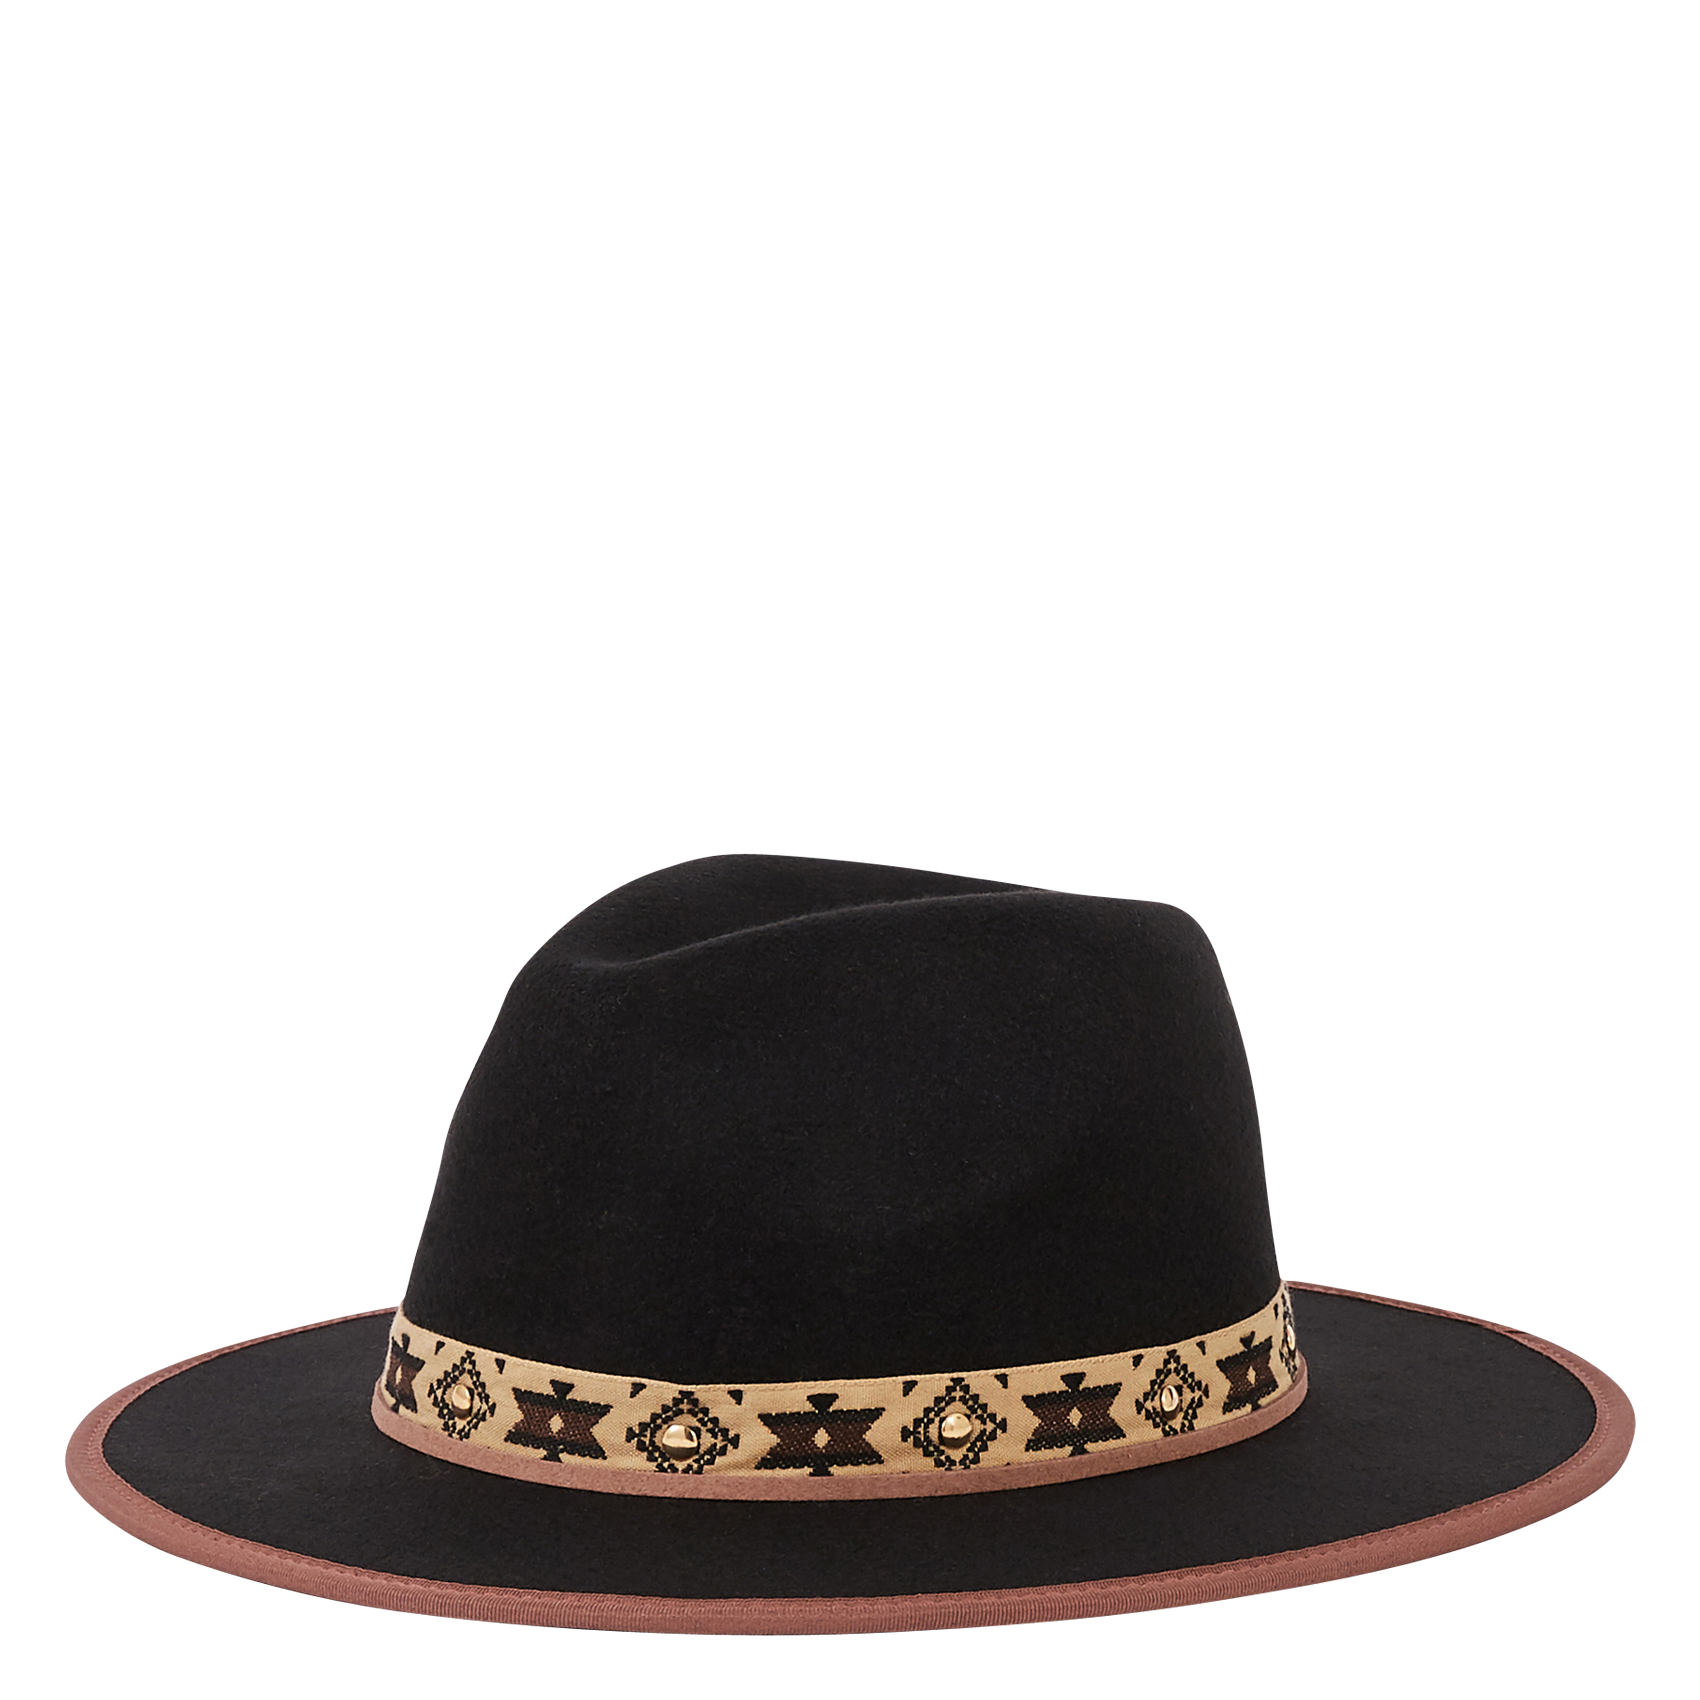 Karl Lagerfeld Sombrero de fieltro negro elegante Accesorios Sombreros Sombreros de fieltro 